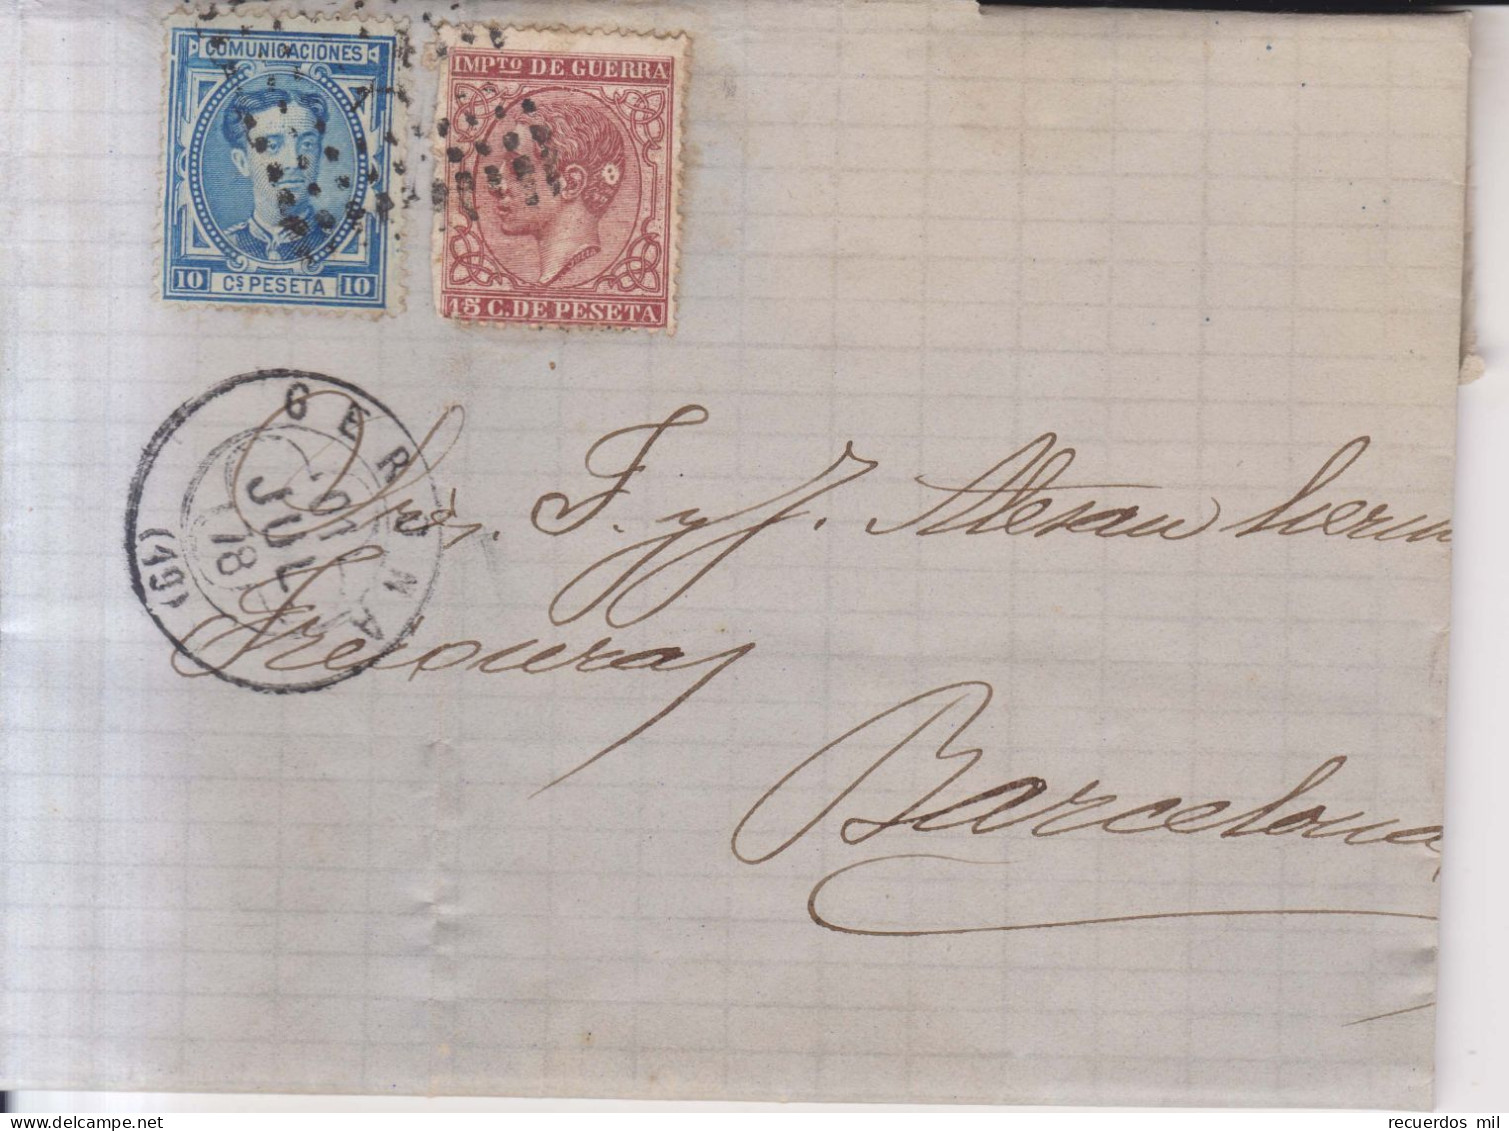 Año 1876 Edifil 175-188 Carta  Matasellos  Rombo Gerona  Membrete Martirian Ramio Perapau - Covers & Documents